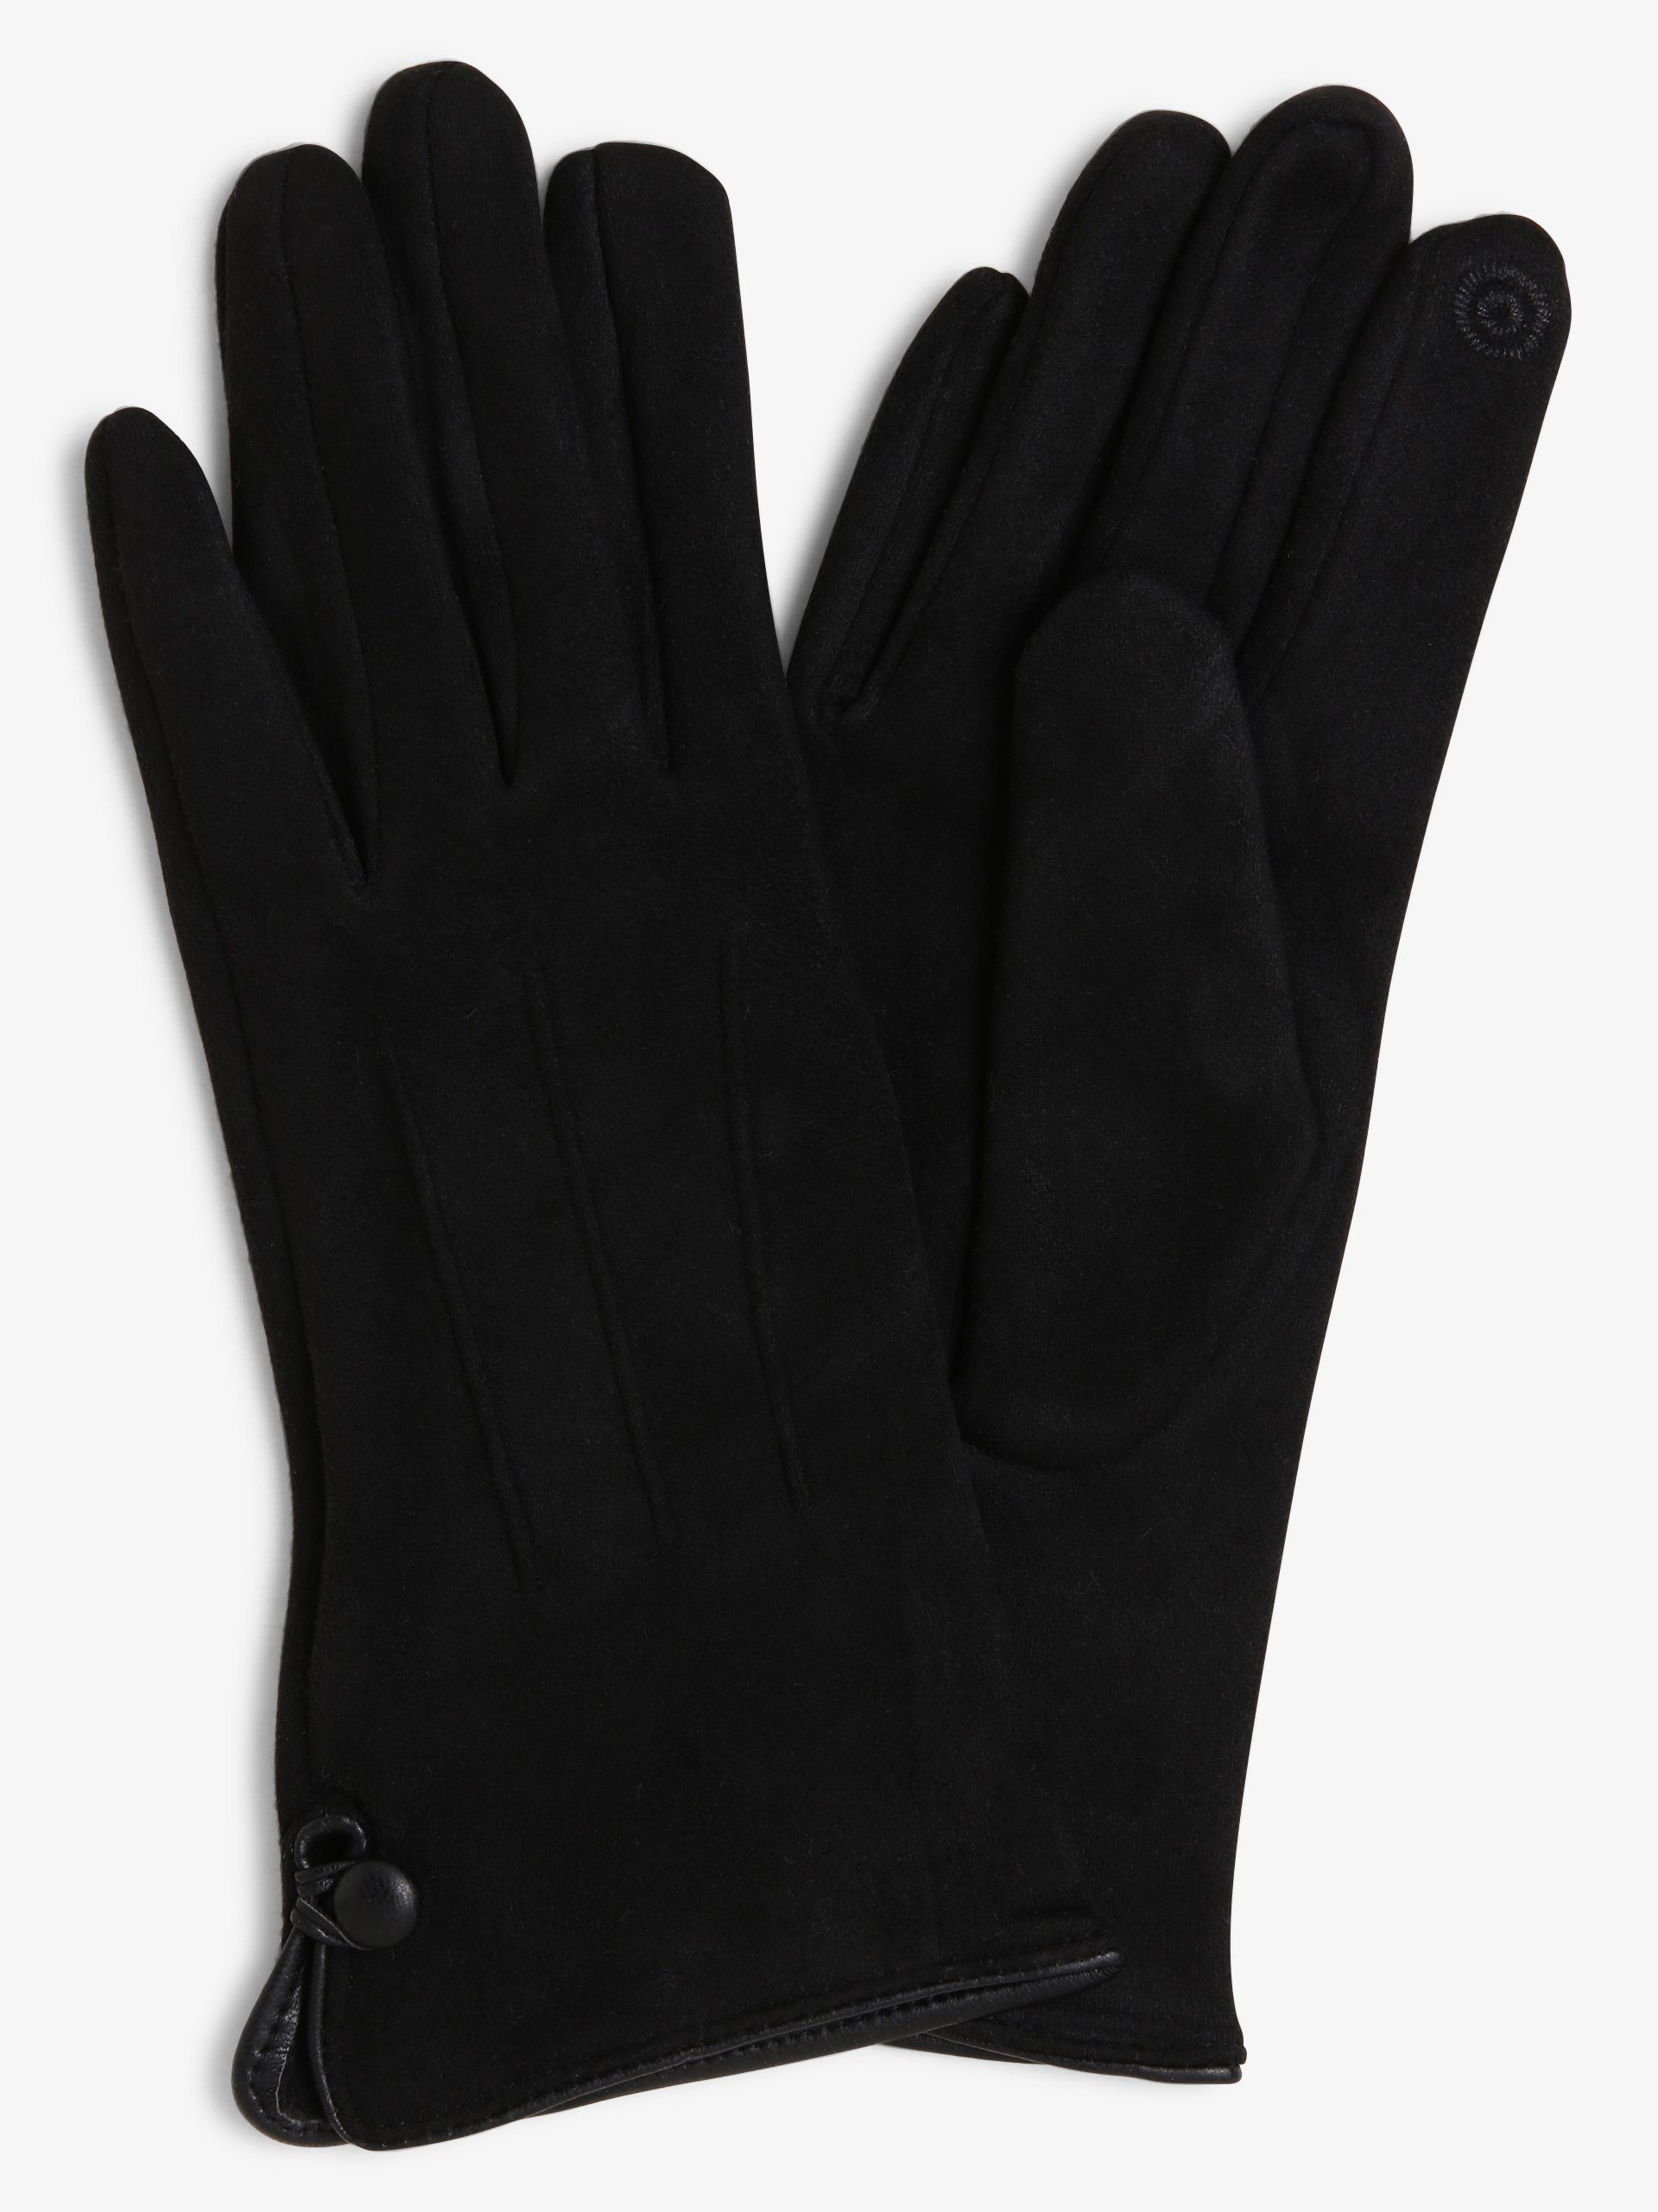 EEM Baumwollhandschuhe schwarz | Handschuhe